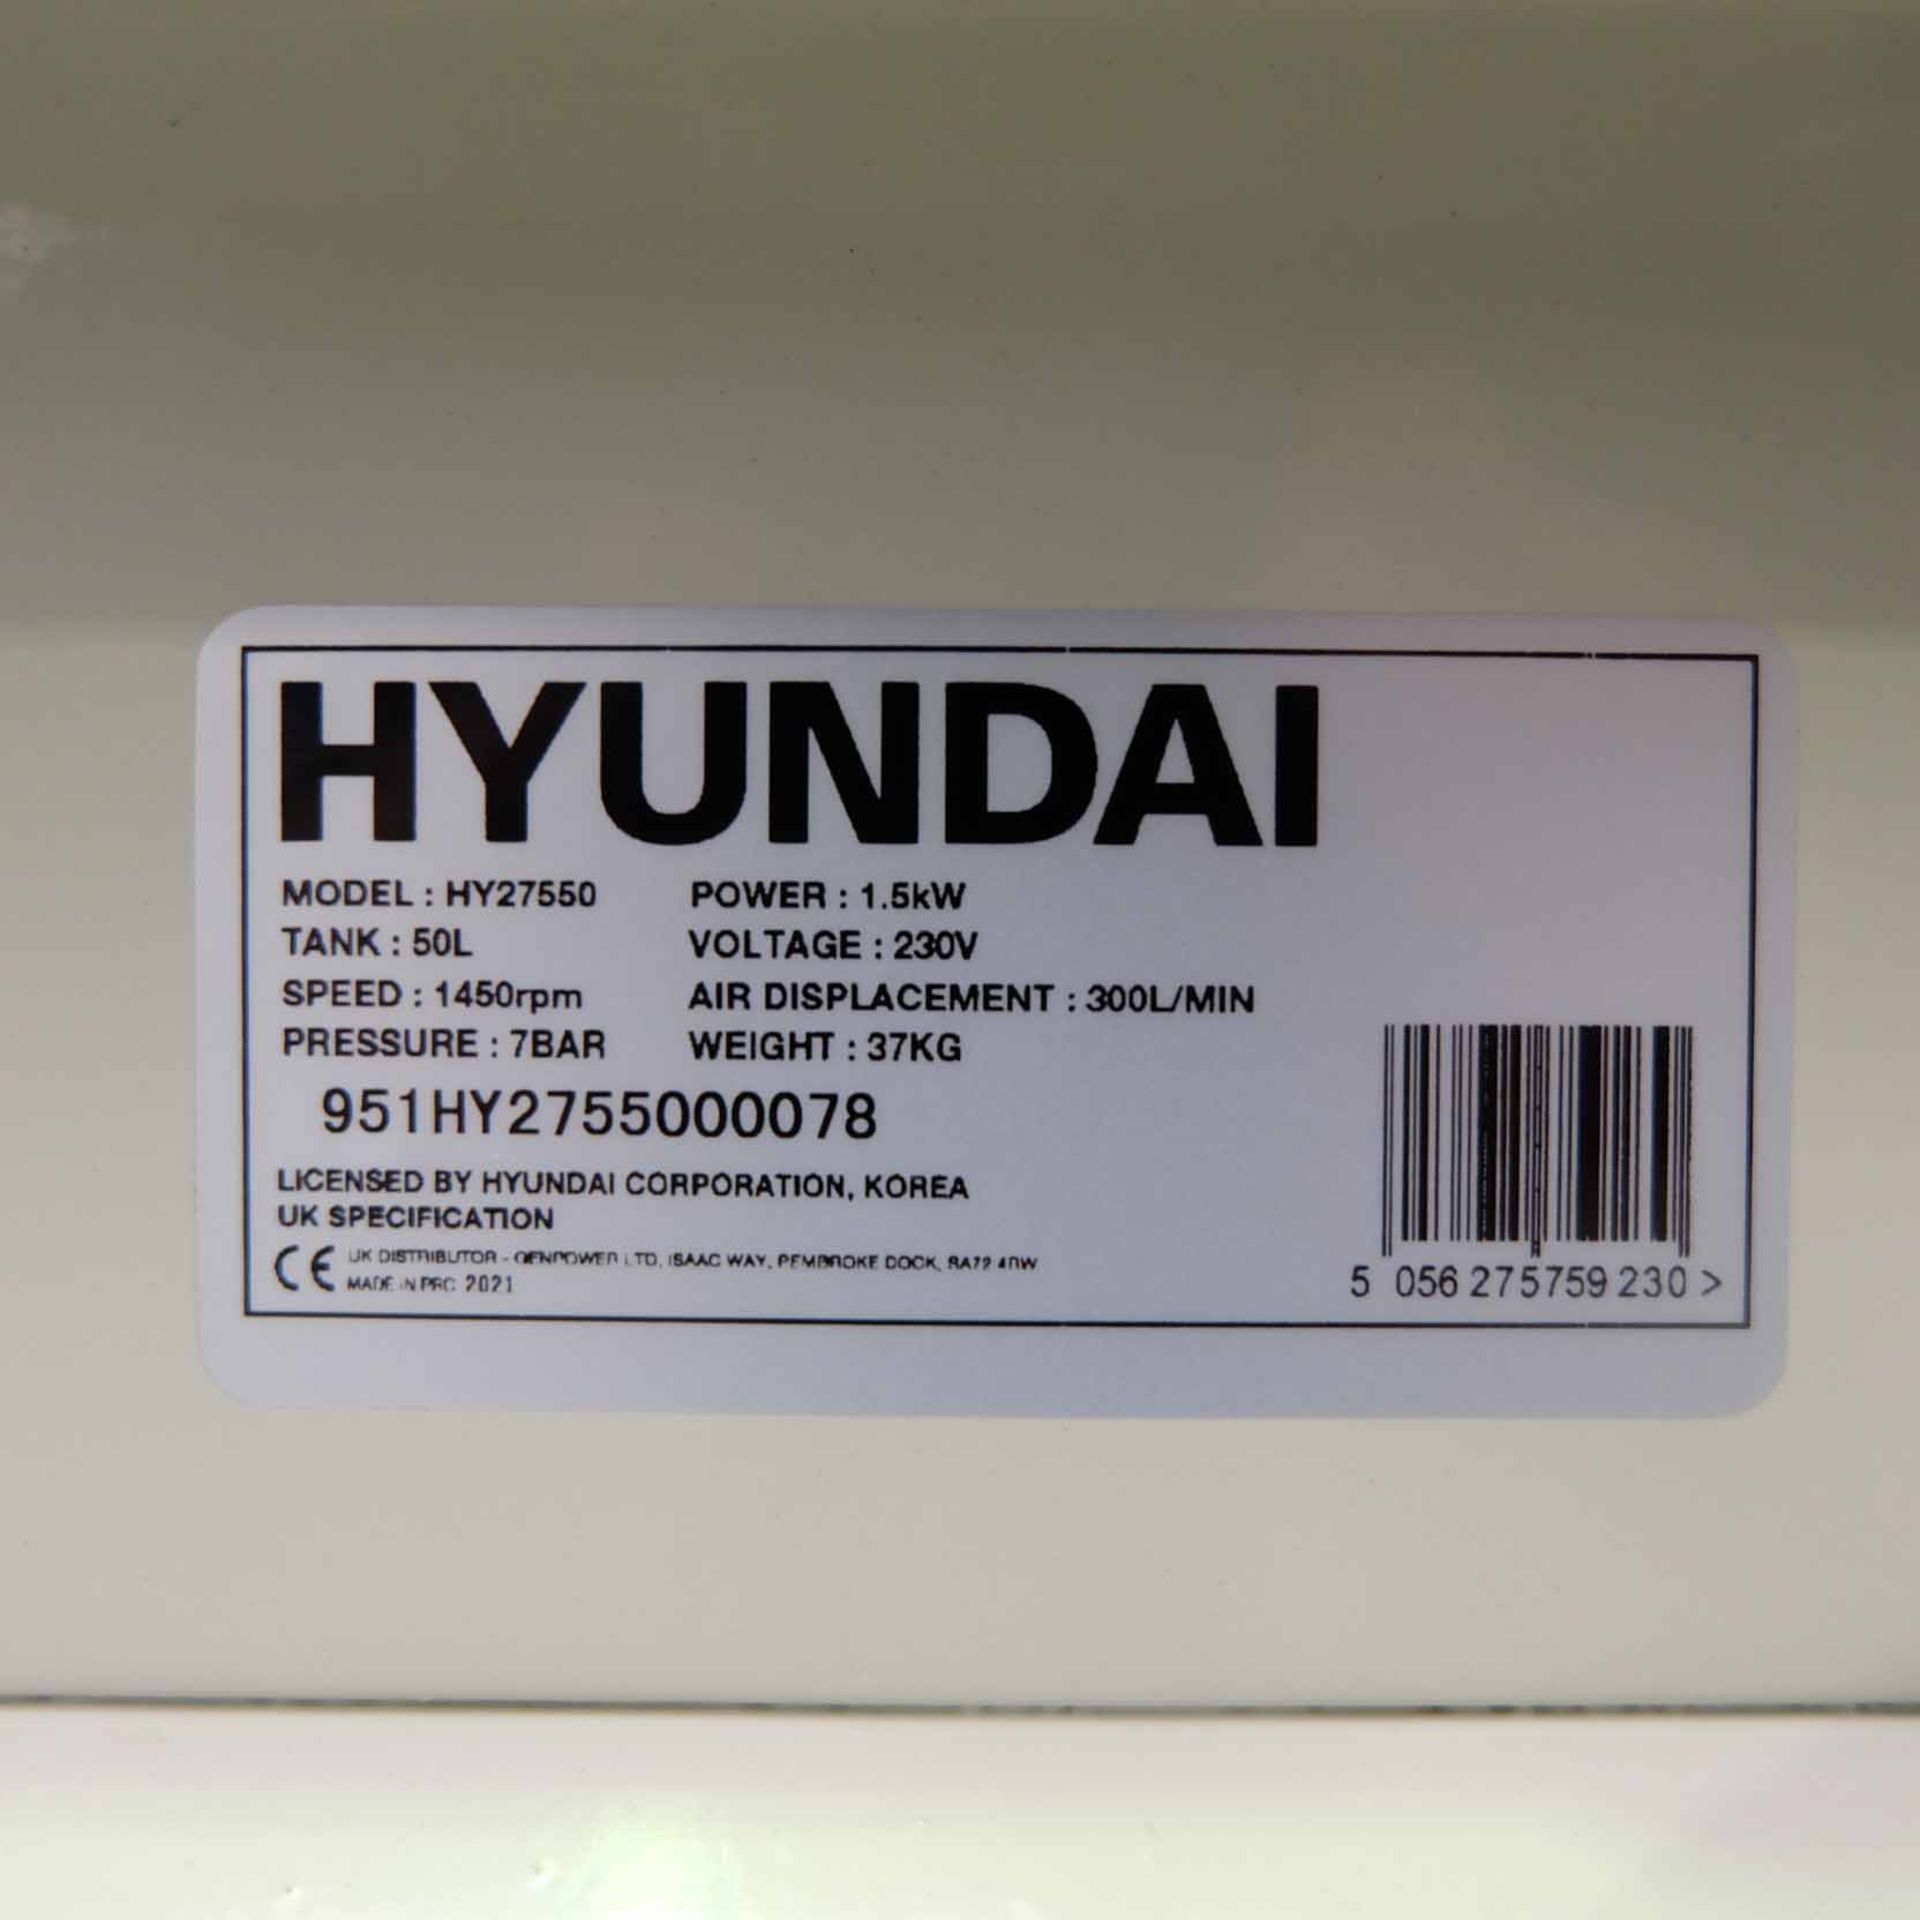 Hyundai Super Silent Oil Free Compressor. Model No HY27550. Tank Capacity 50 Litres. Pressure 7 Bar. - Image 7 of 7